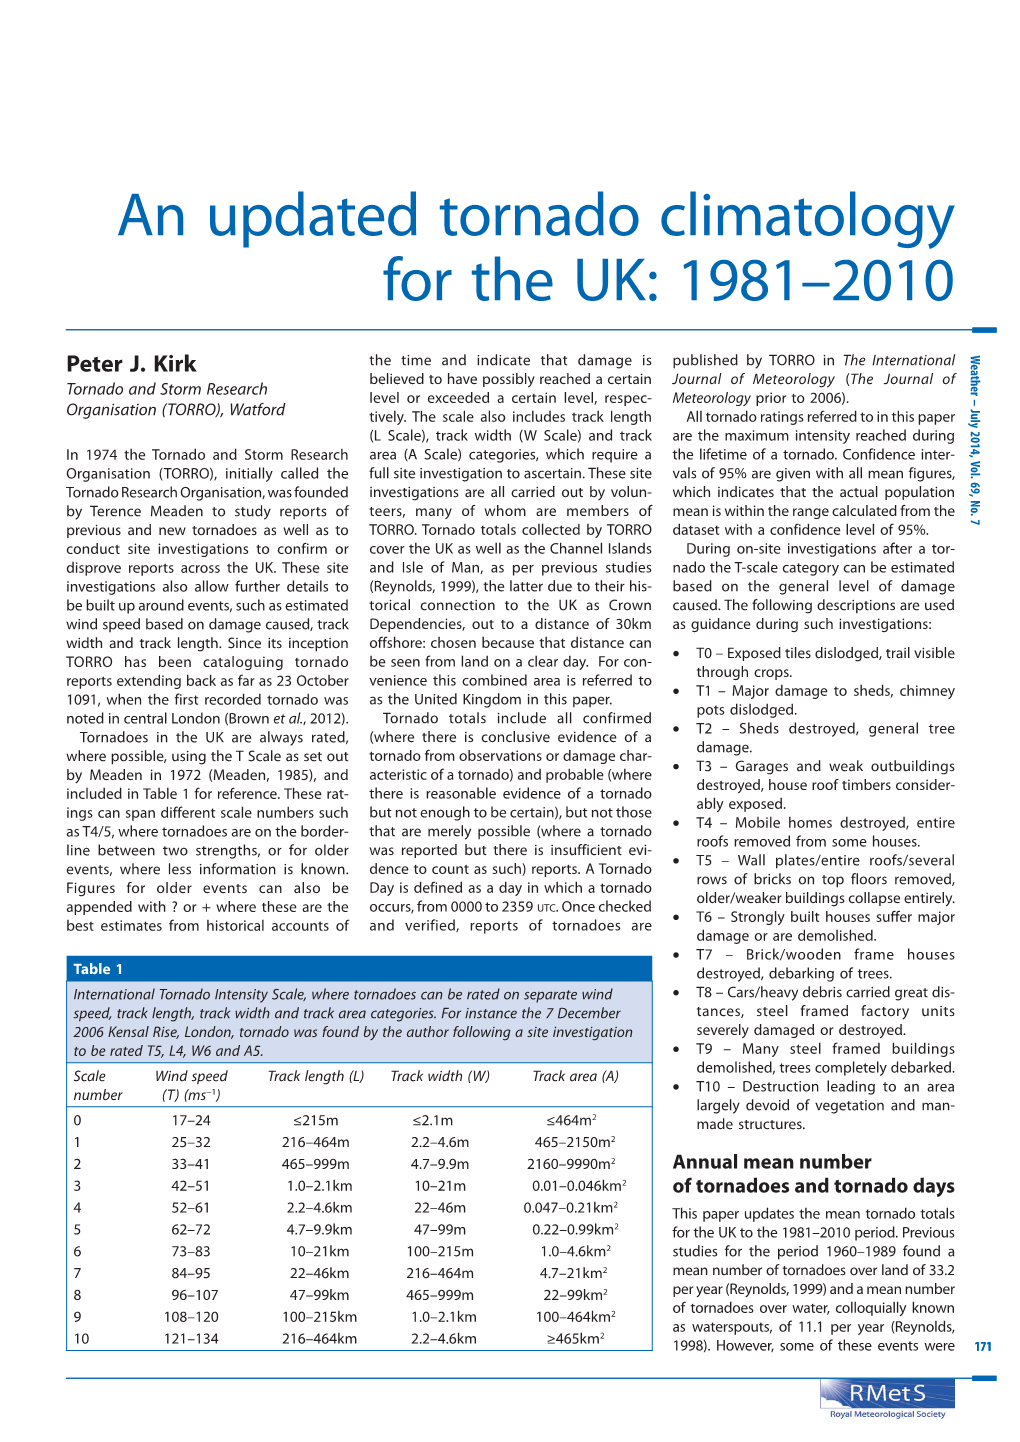 An Updated UK Tornado Climatology:1981-2010